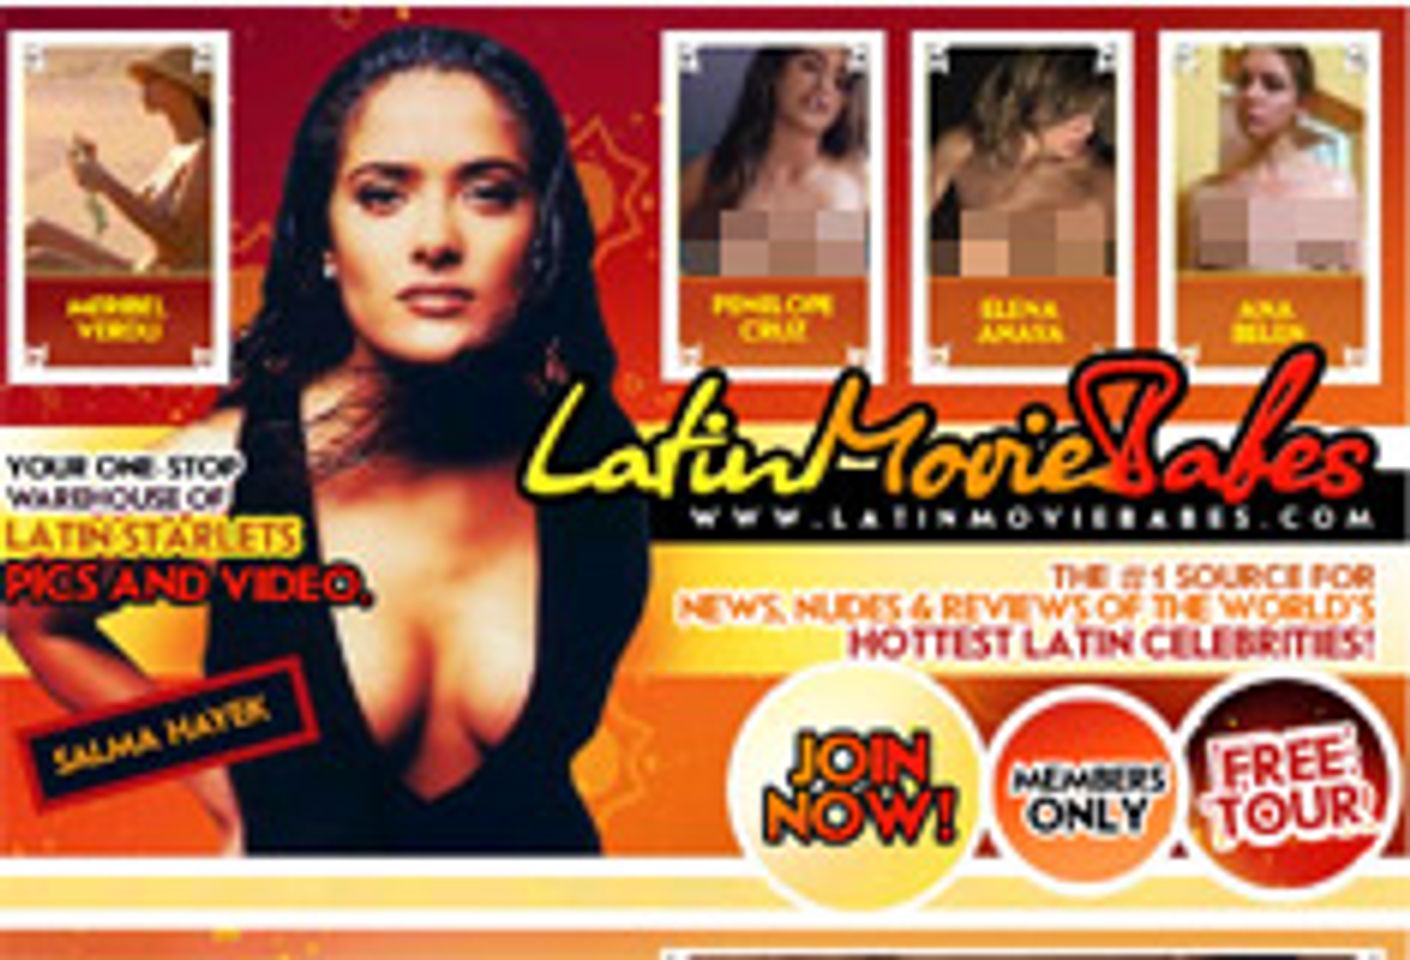 MrSkin Launches Latina Celebrity Site